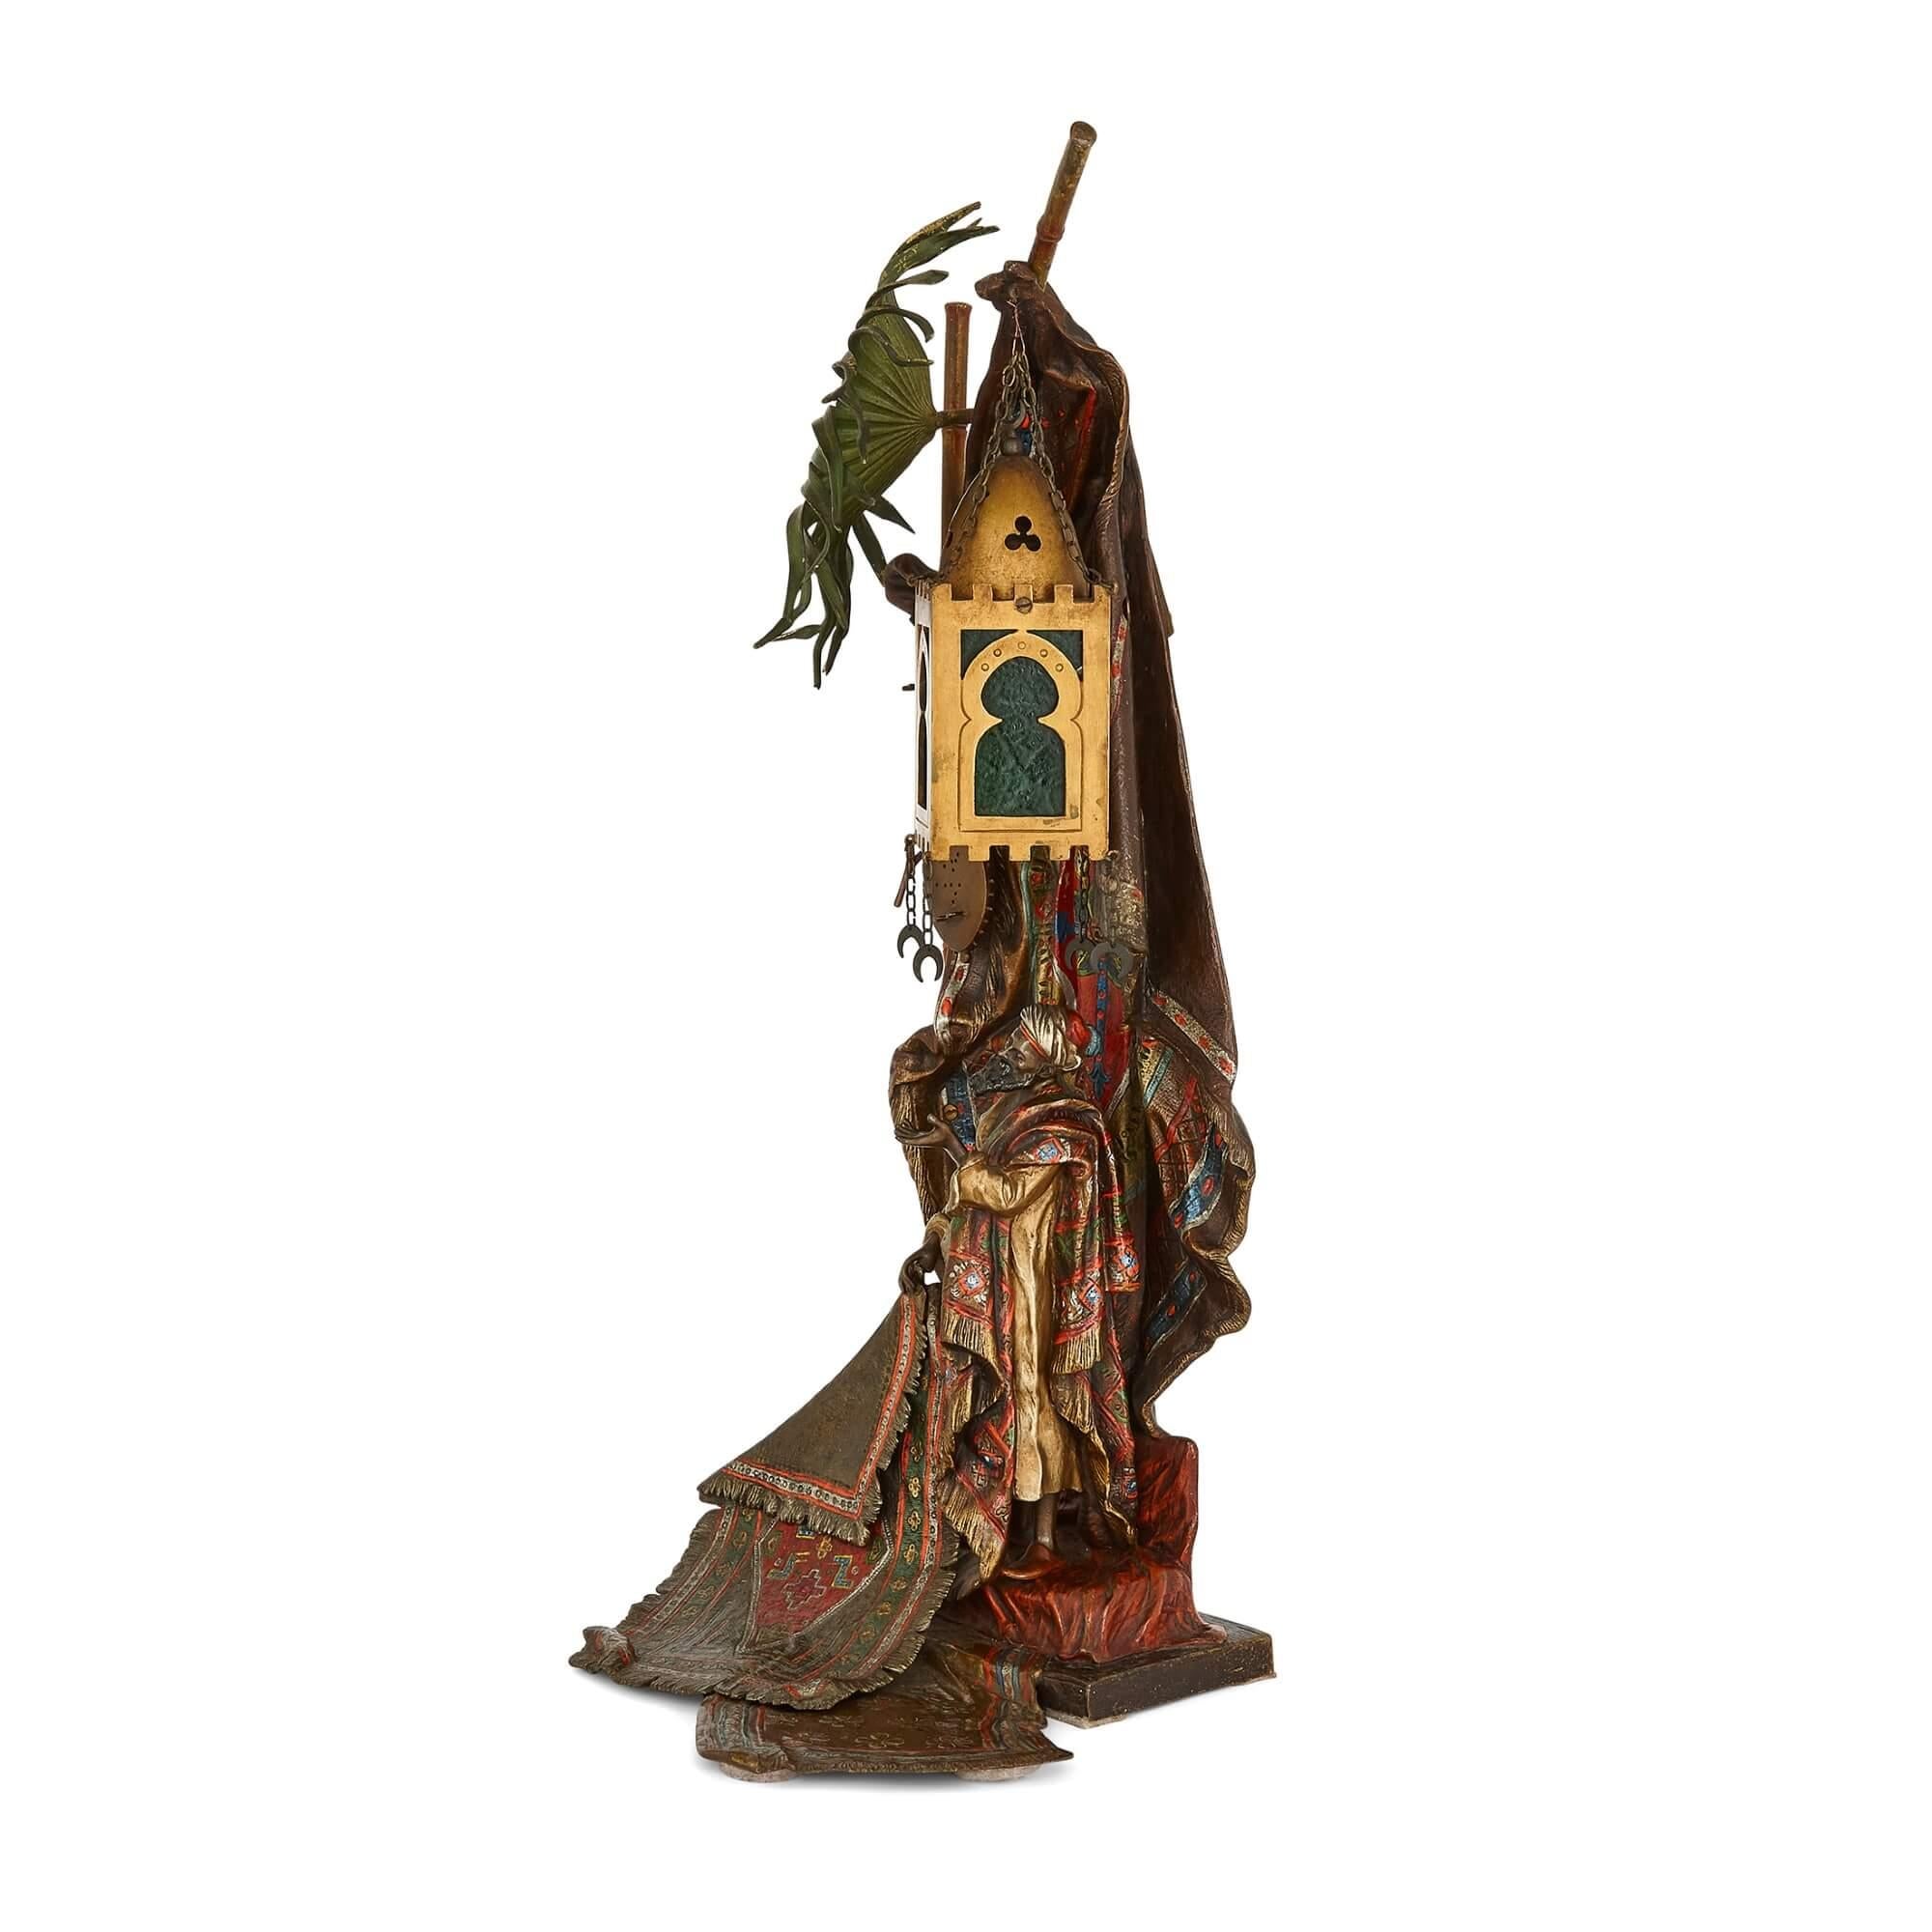 Antique bronze Orientalist sculpture lamp by Franz Xaver Bergman
Austrian, c. 1910
Measures: height 47cm, width 20cm, depth 20cm

This fine bronze lamp is modelled in the Orientalist manner that prevailed in Vienna during the early twentieth